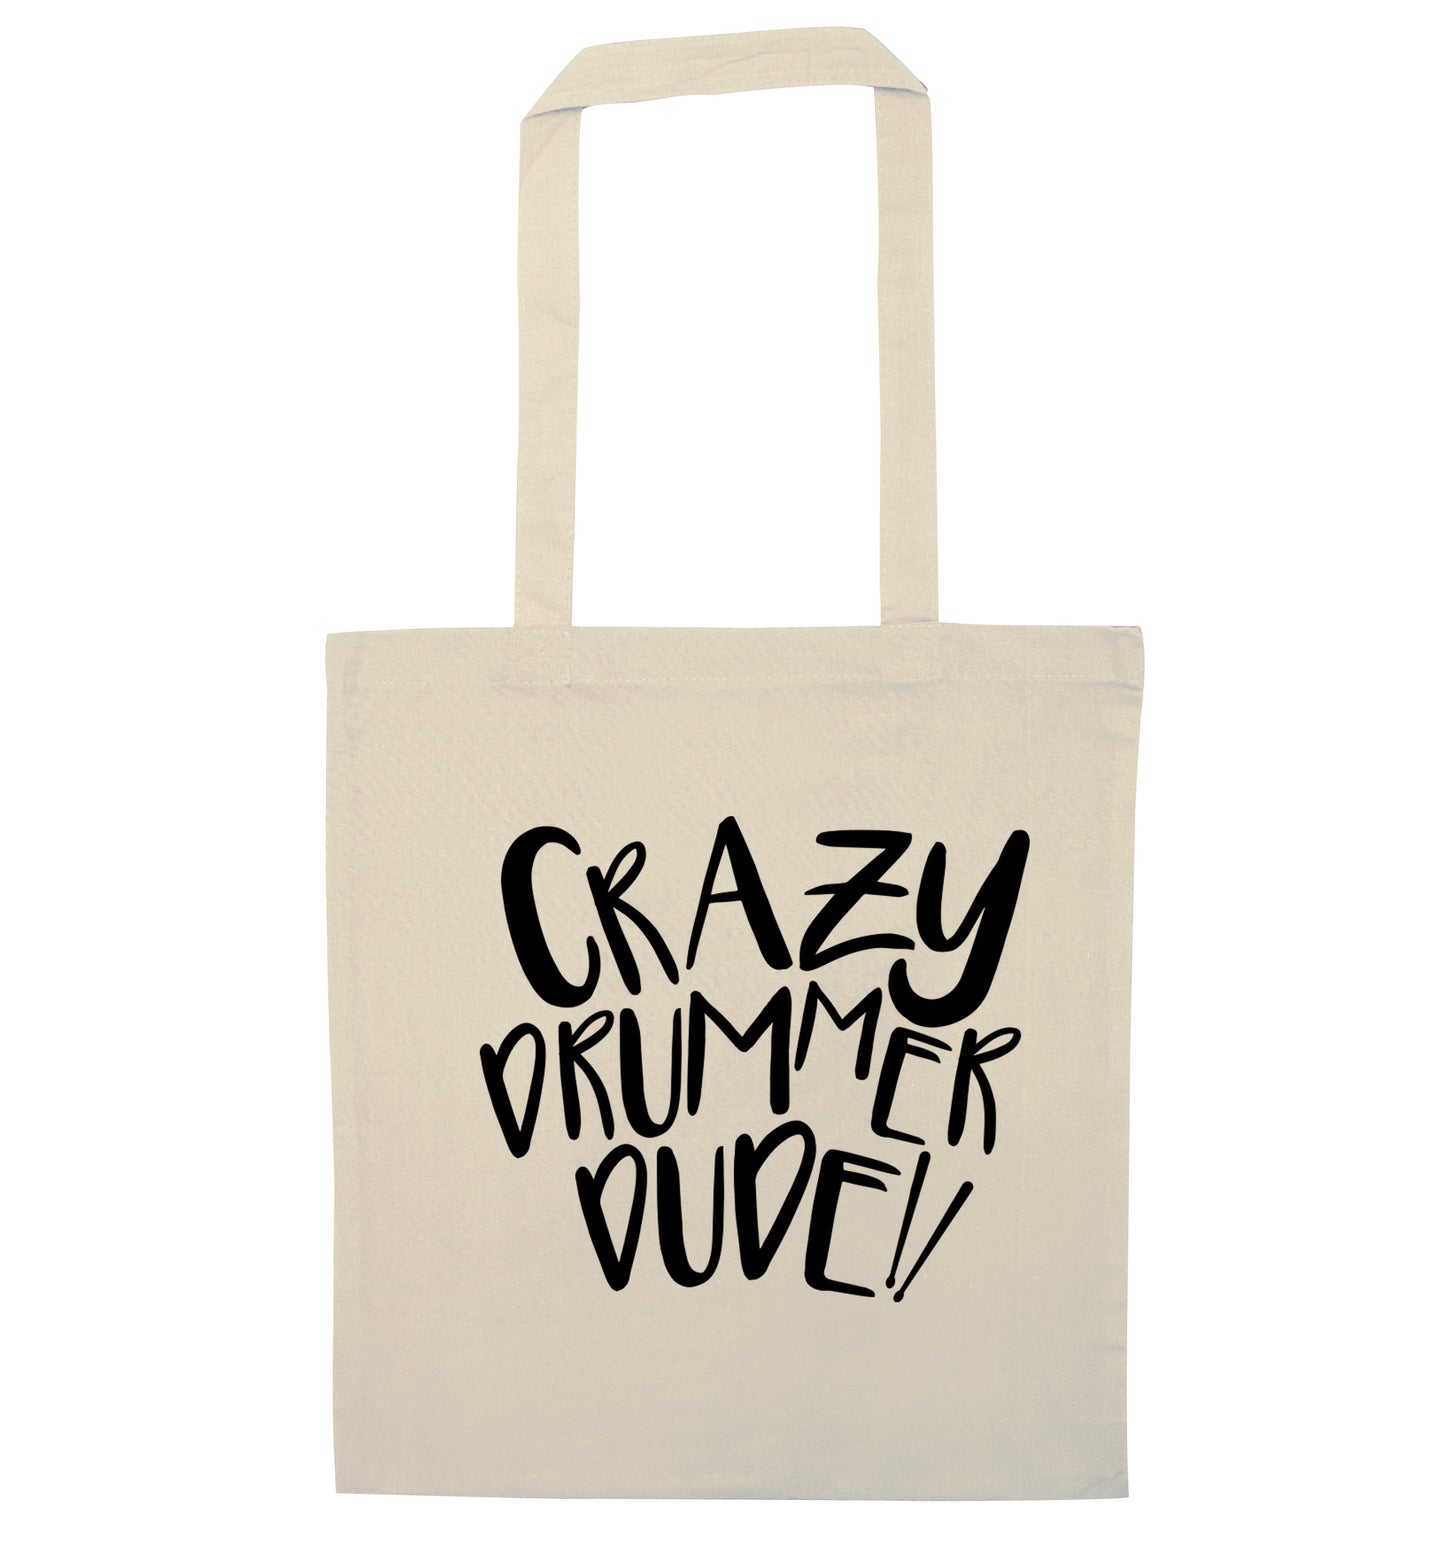 Crazy drummer dude natural tote bag